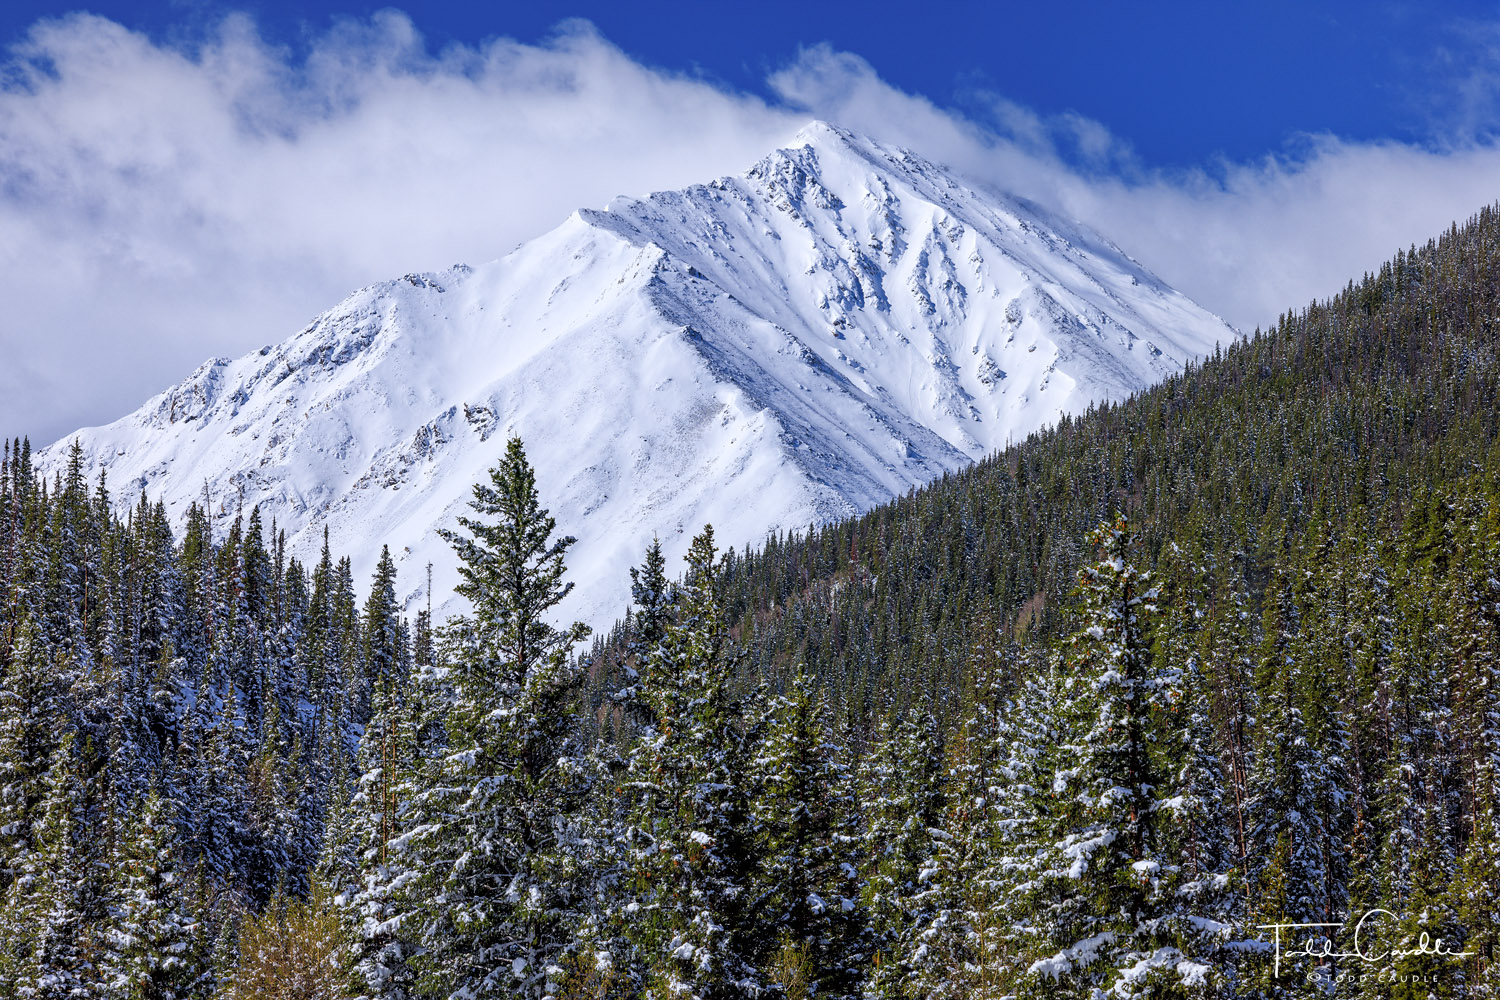 An unexpected late-season snow creates a winter(-looking) wonderland around Torreys Peak.